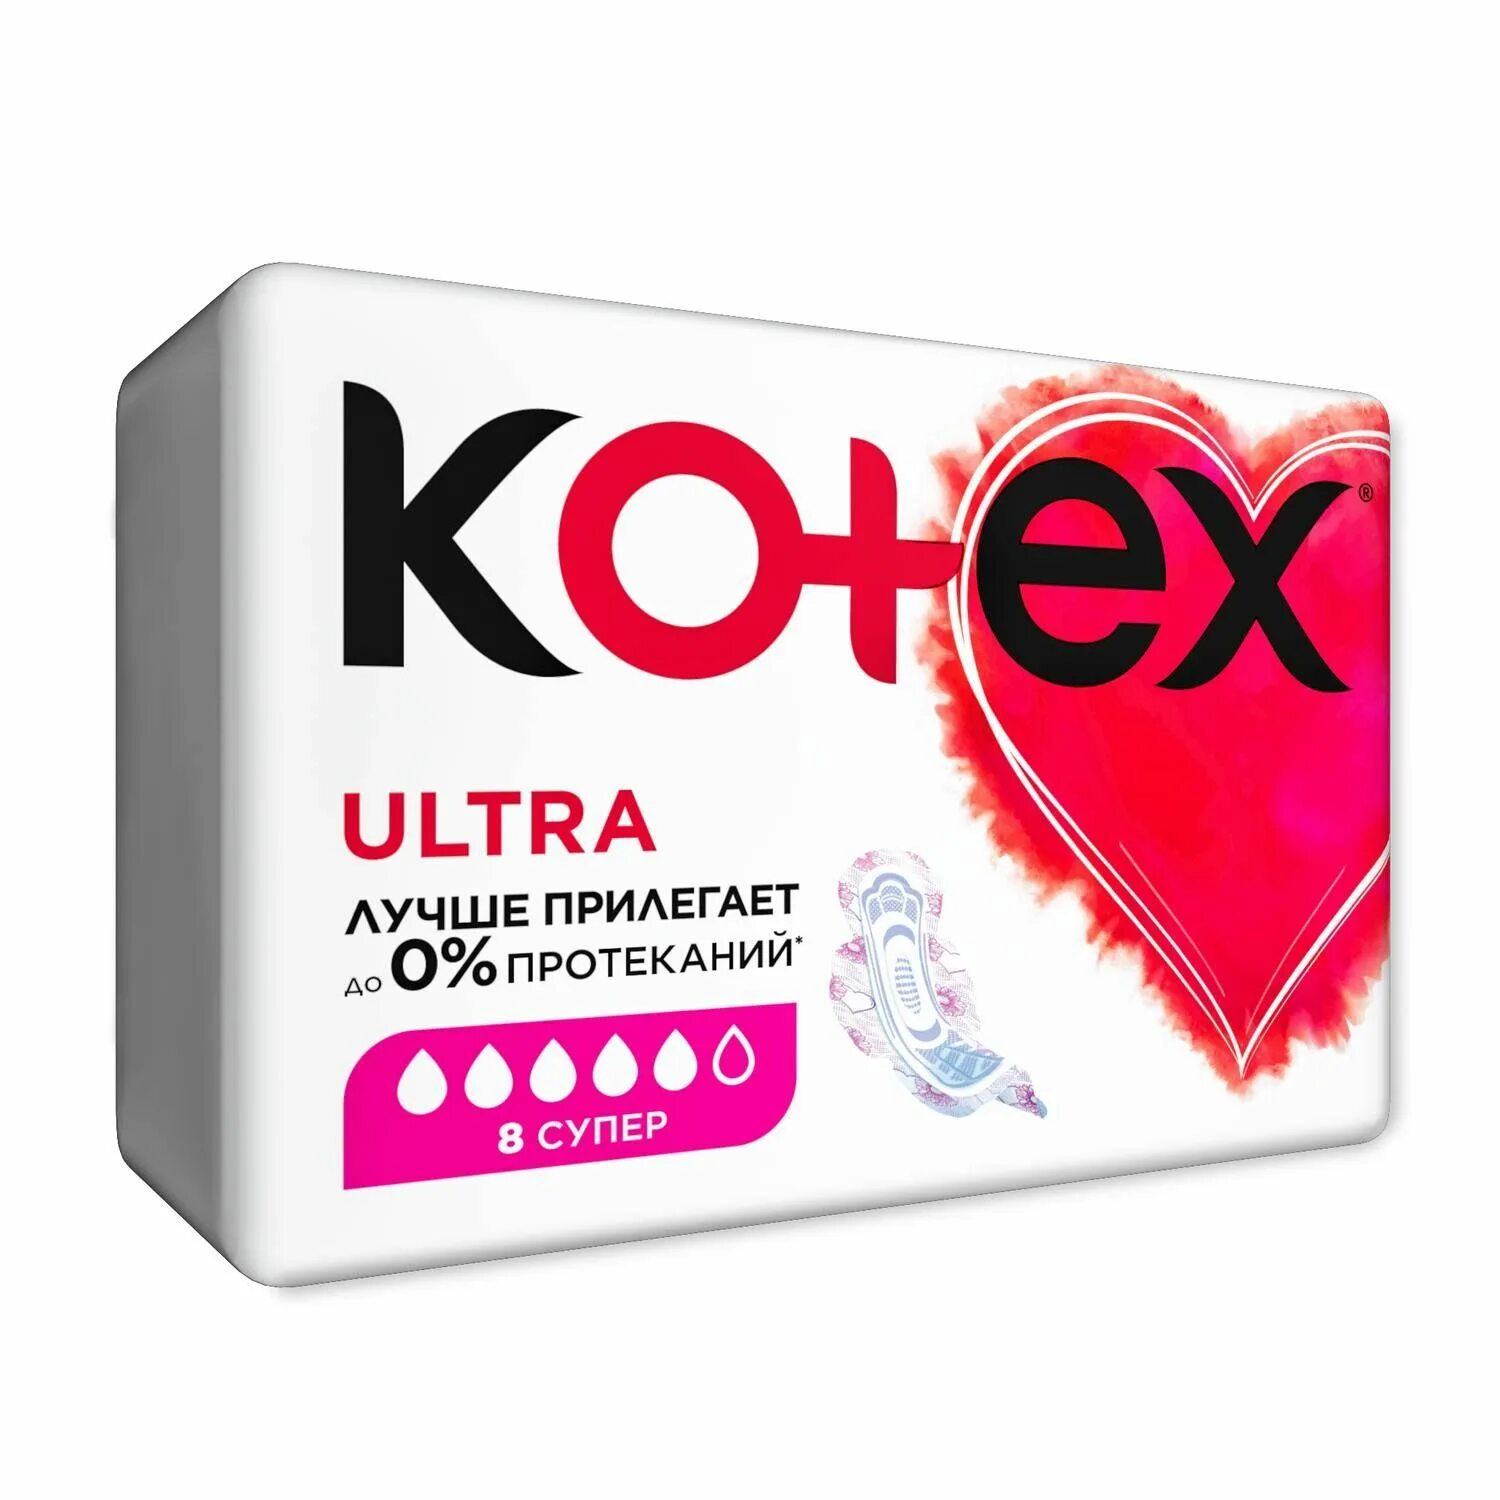 Прокладки гигиенические Kotex Ultra super, 8шт. Kotex Ultra Soft super Pads 8. Прокладки Котекс ультра сетч супер 8шт. Прокладки Котекс ночные 8 шт. 8 ultra